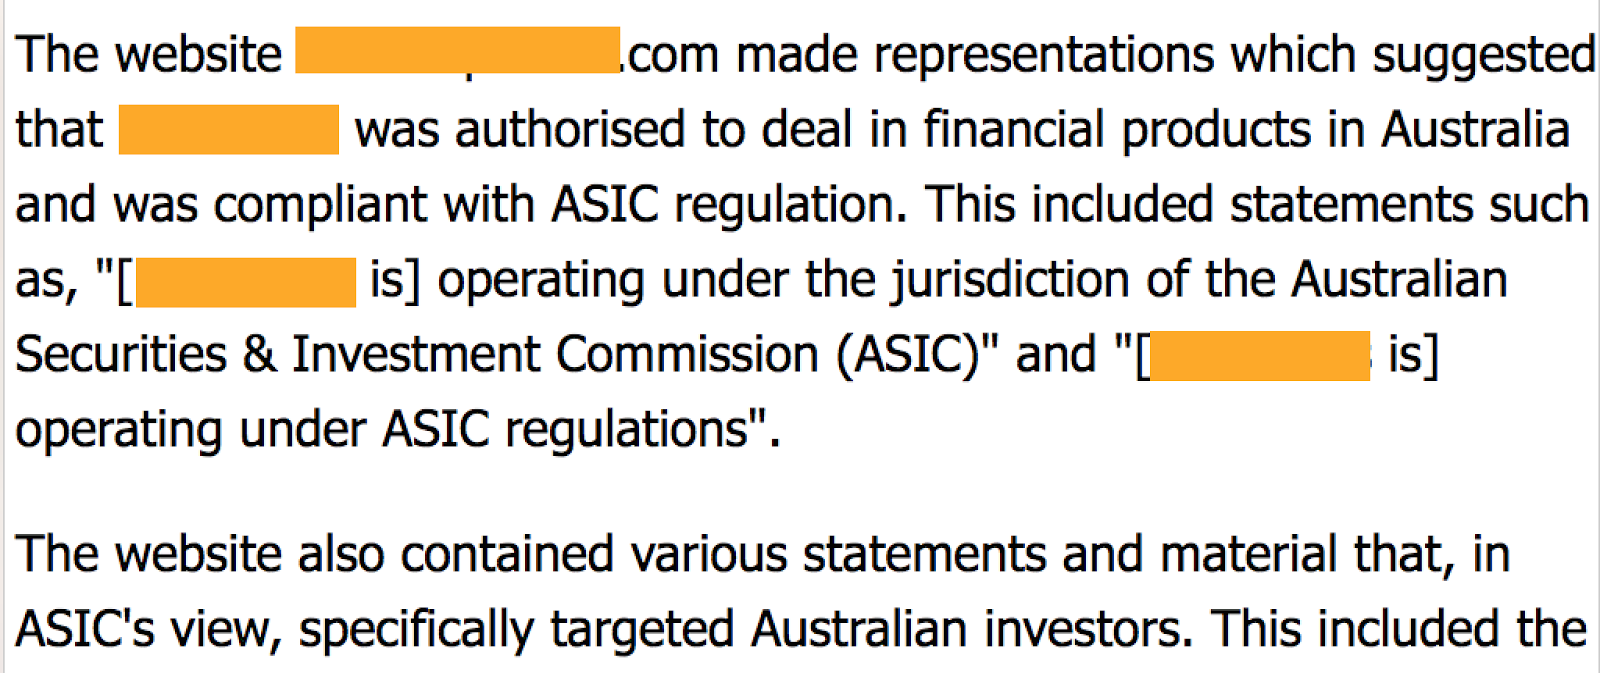 7 - Example 5 - Violation report issued by Australian regulator